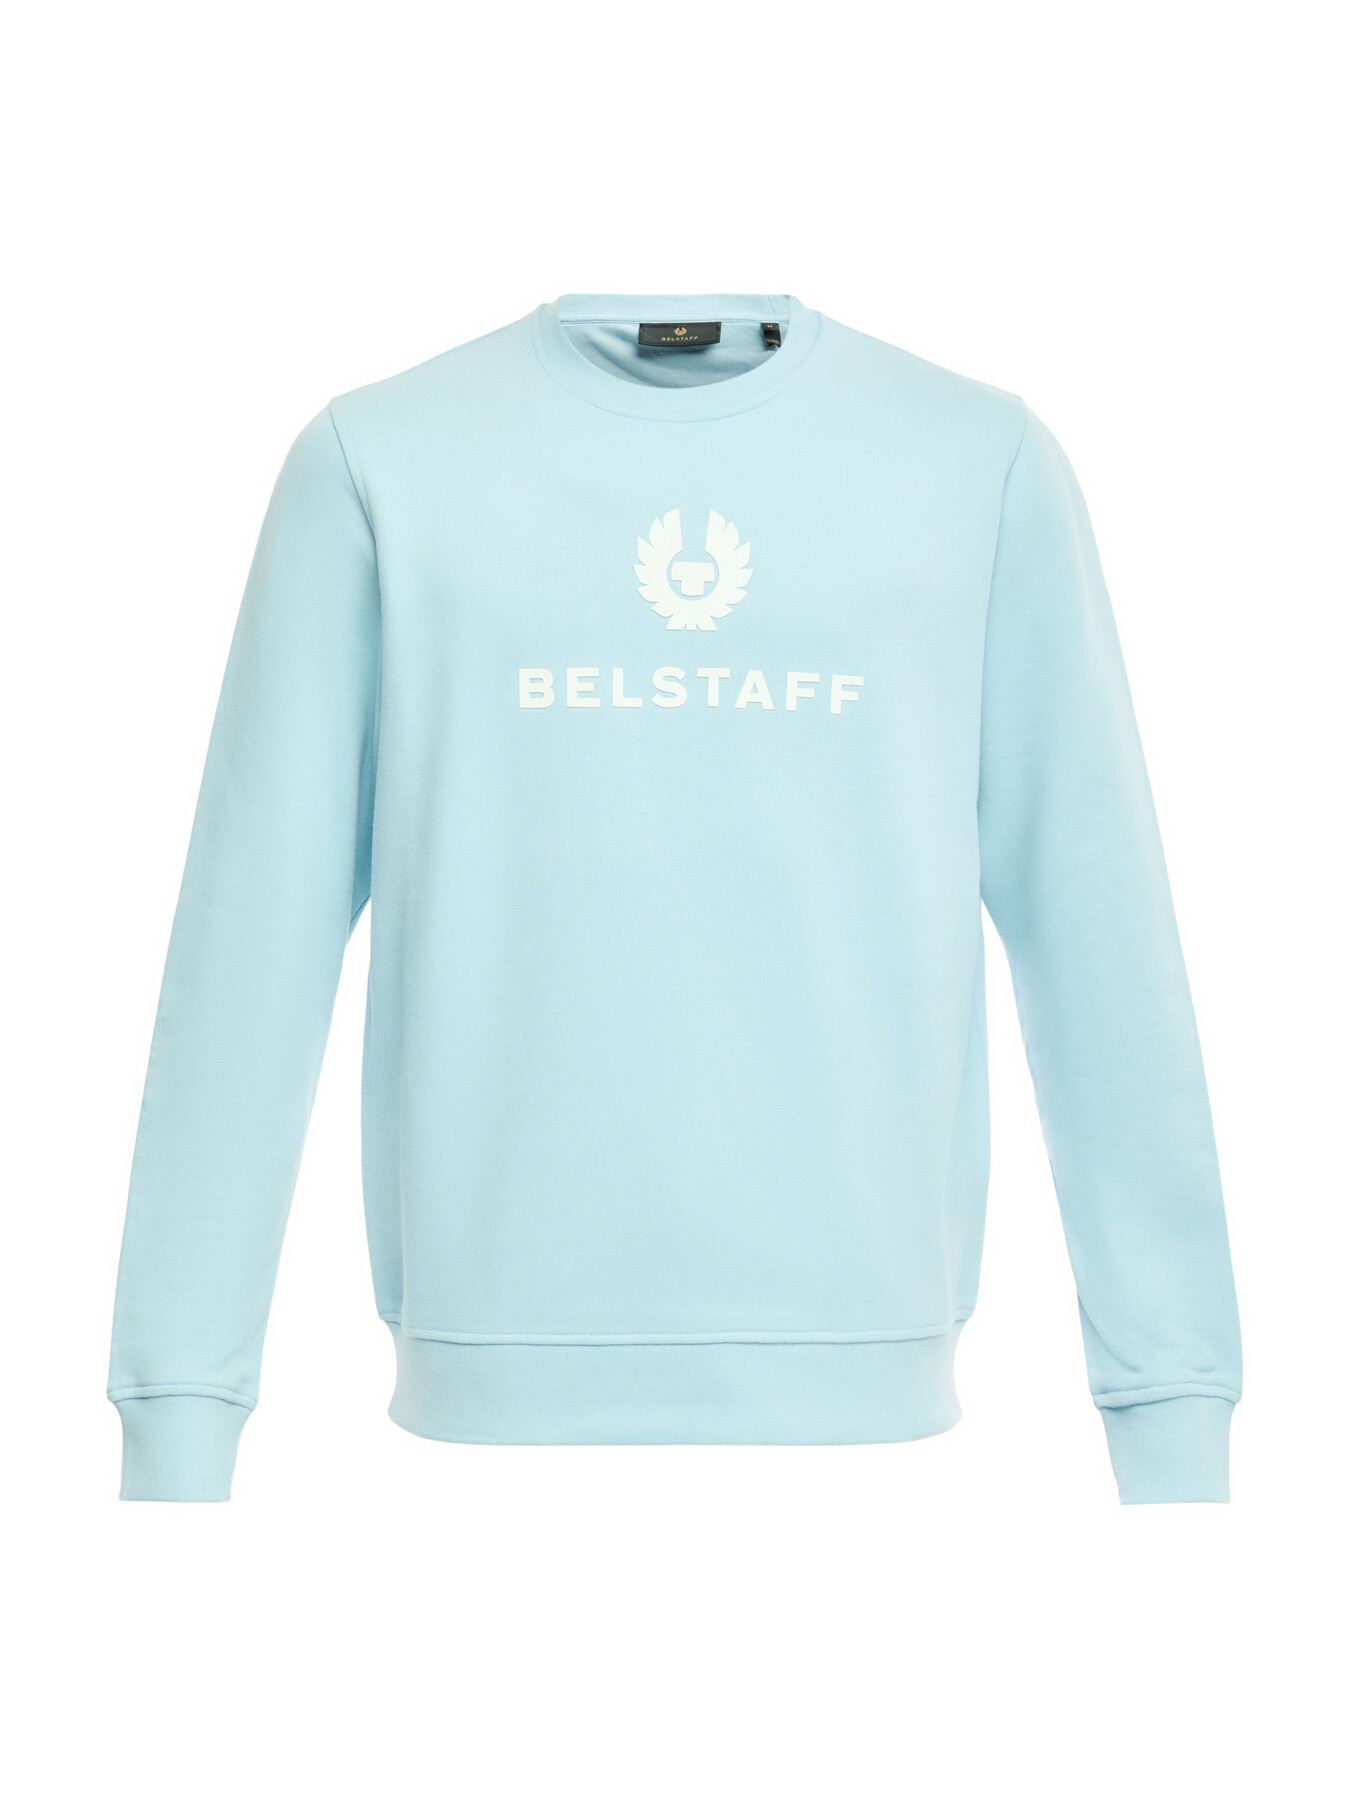 Belstaff Men's Signature Crewneck Sweatshirt Blue